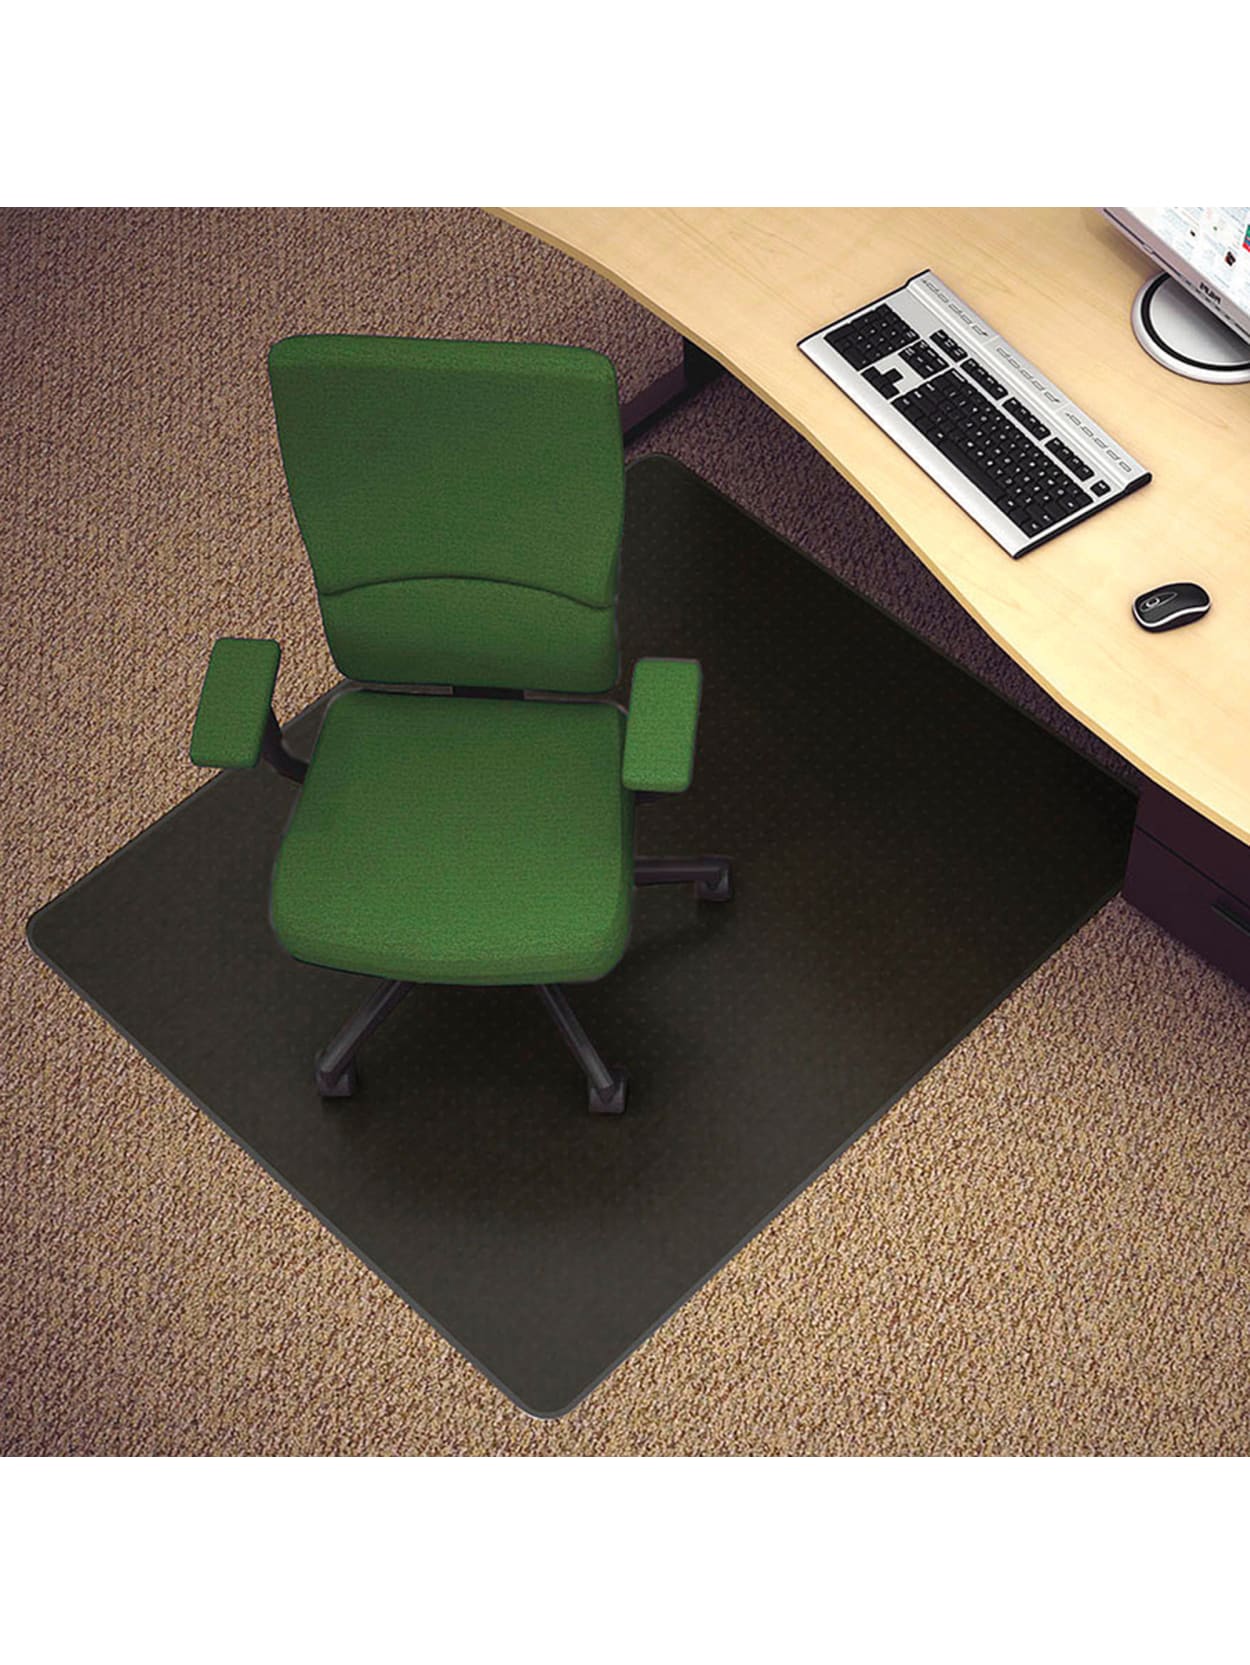 Deflect O Economat Vinyl Chair Mat For Hard Floors Rectangular 45 W X 53 D Black Office Depot